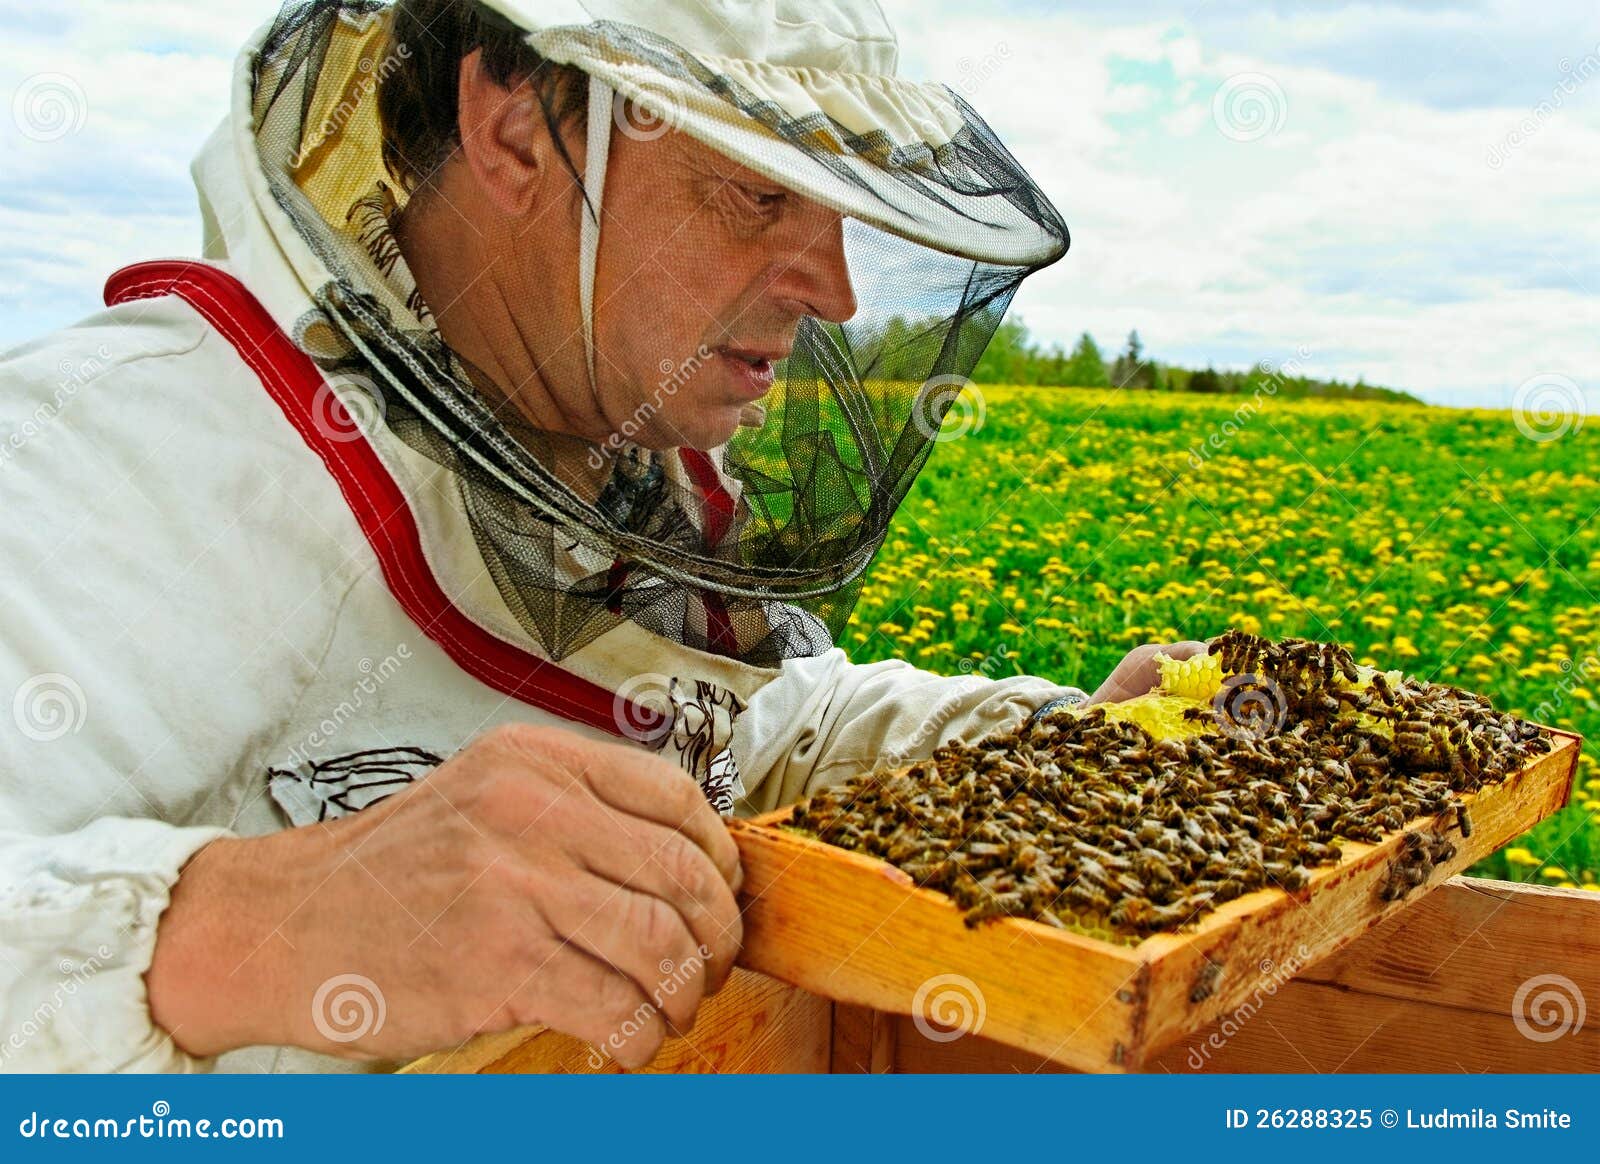 Working Apiarist Stock Image Image Of Beekeeping Honey 26288325